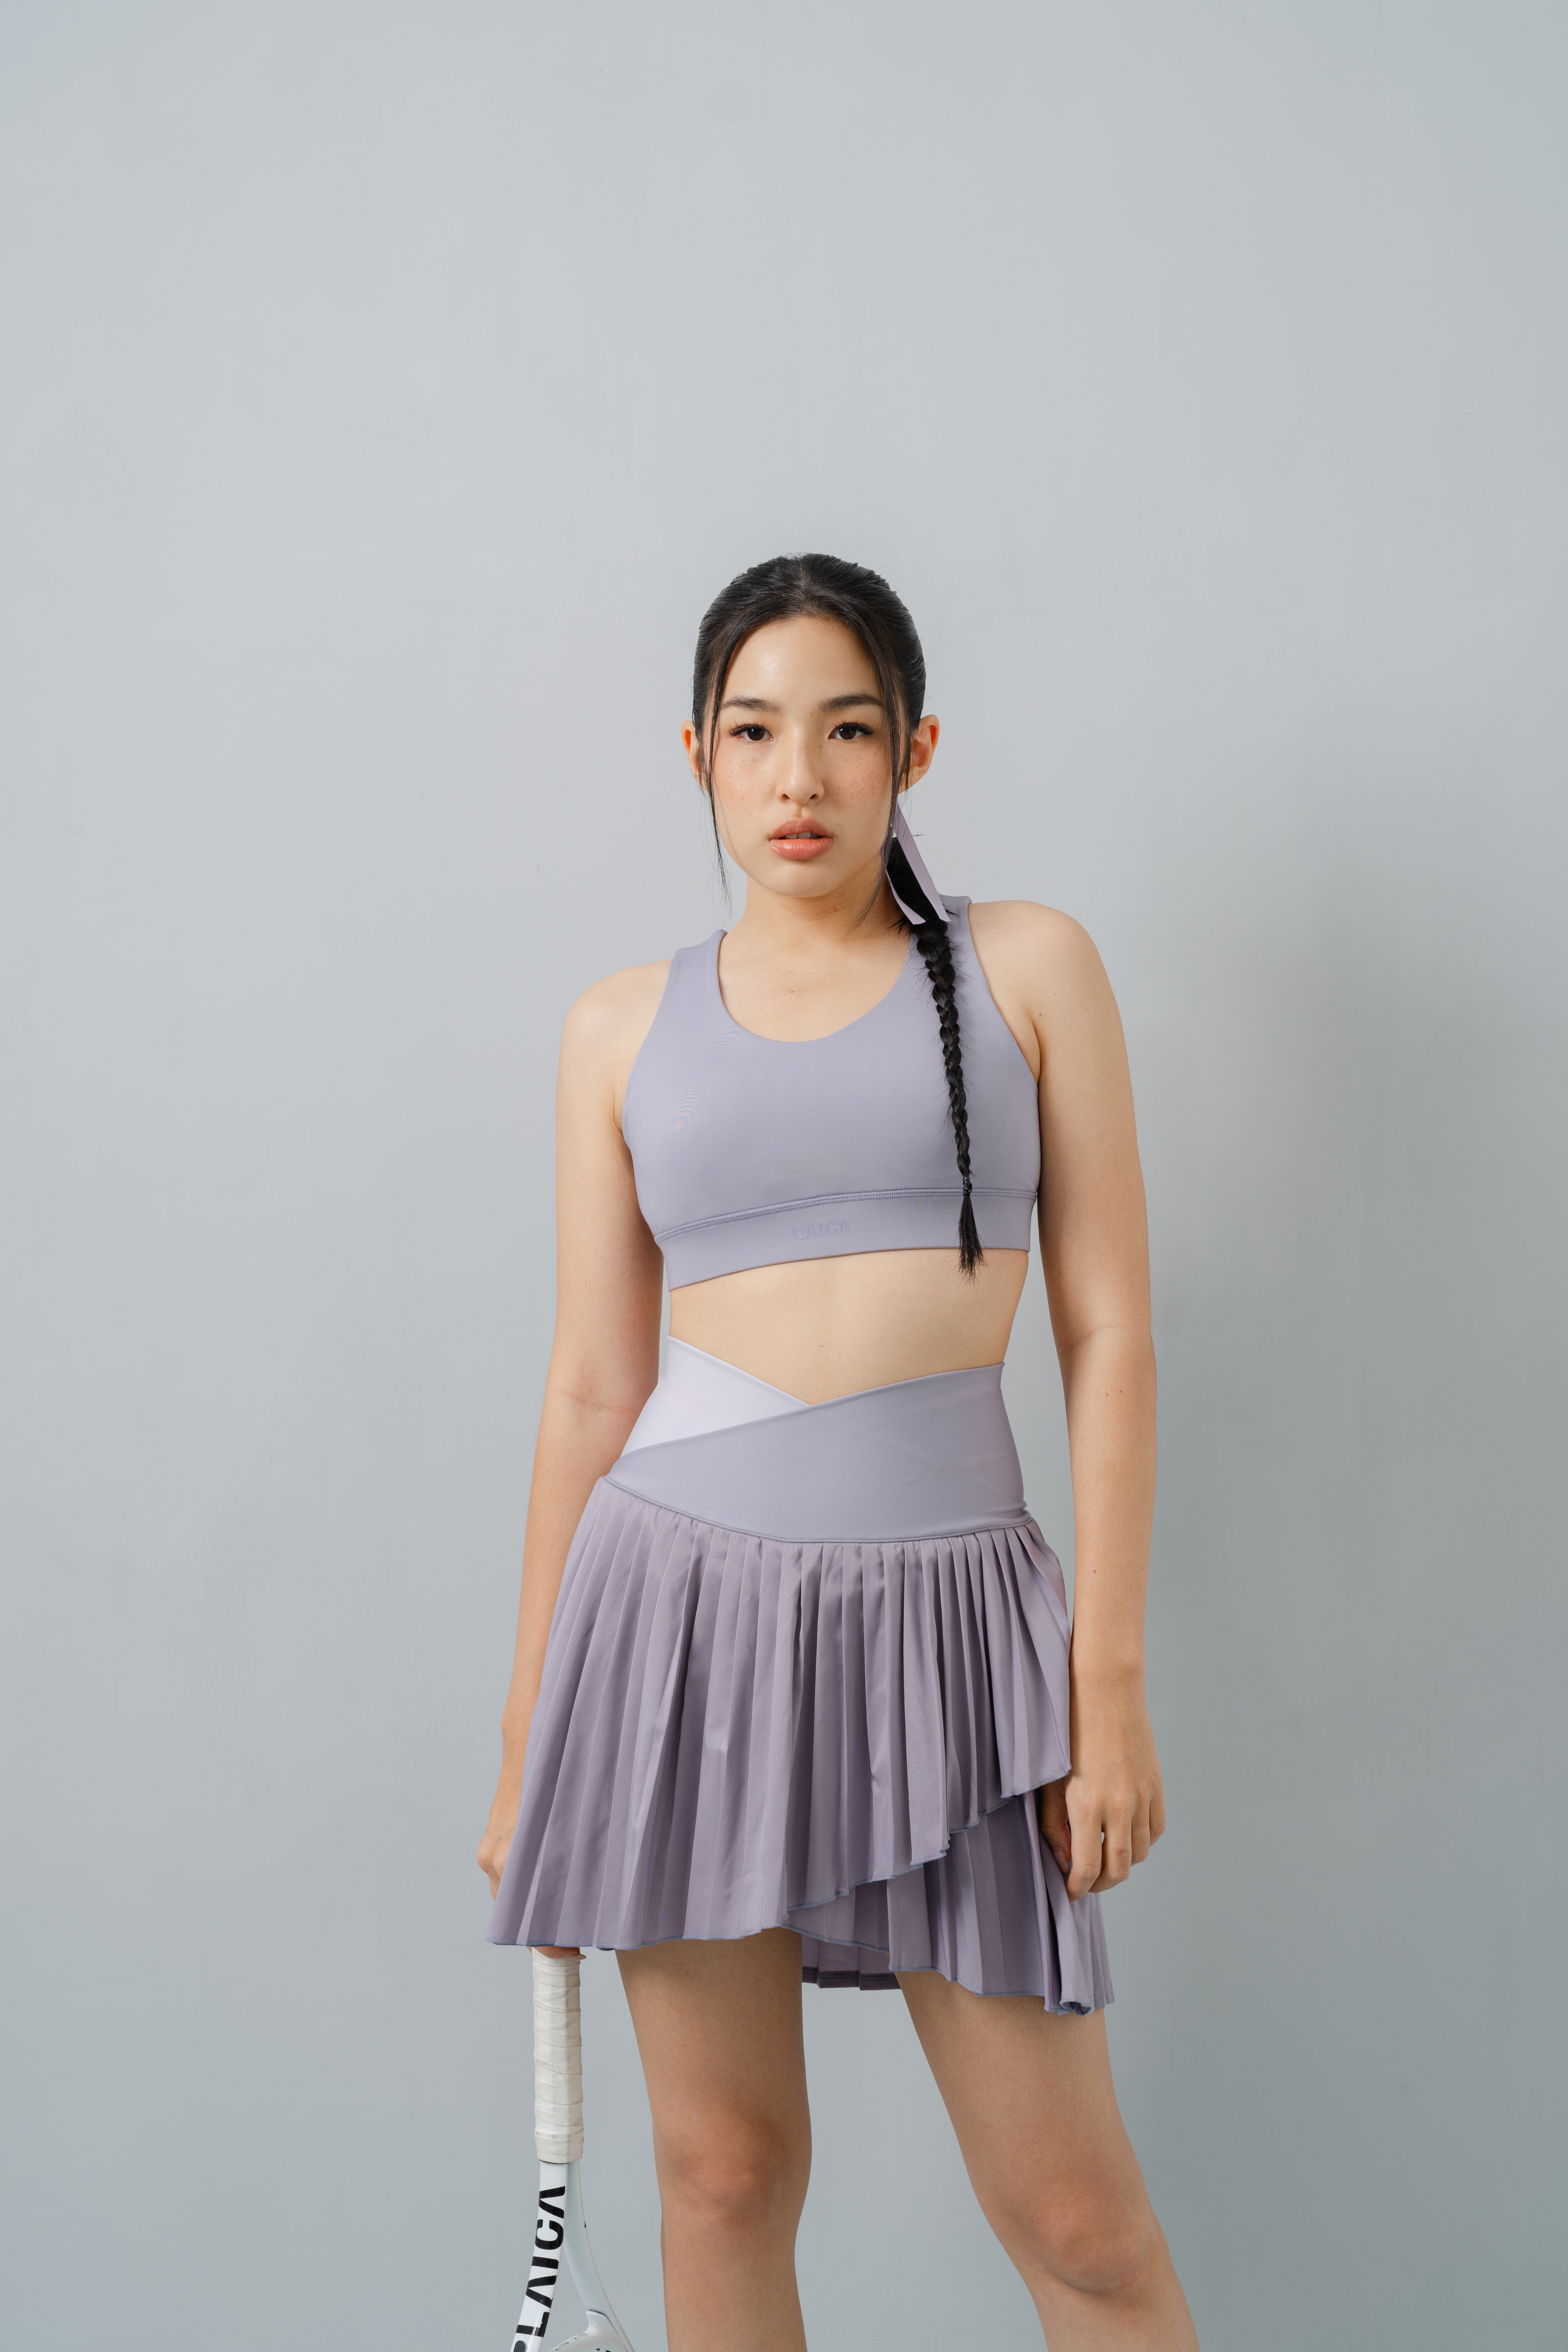 LAICA x Tiffany Crossover Skirt - Sydney